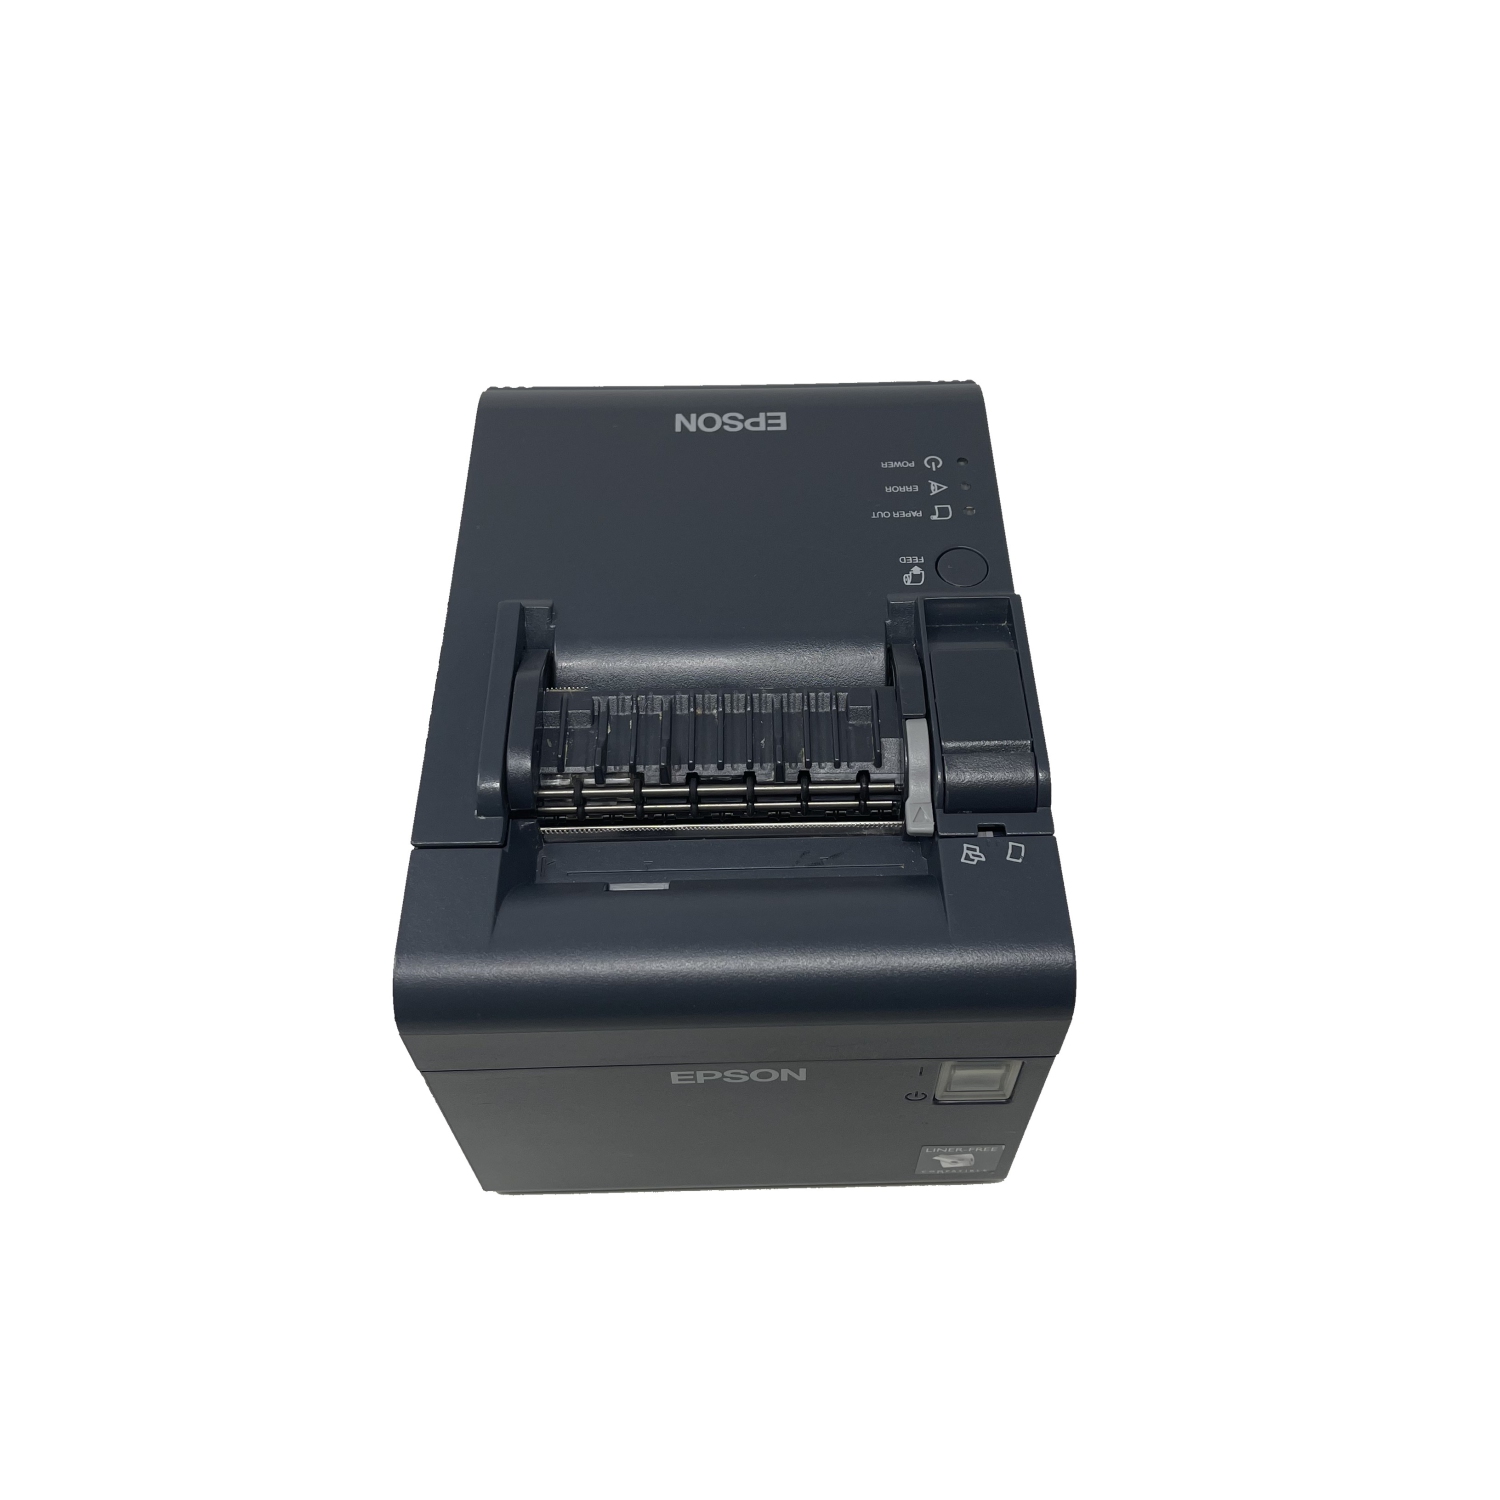 Refurbished (Good) - EPSON TM-L90 M313C THERMAL POS PRINTER | Restaurant  Printer | Label & Receipt Printer with Ethernet Interface